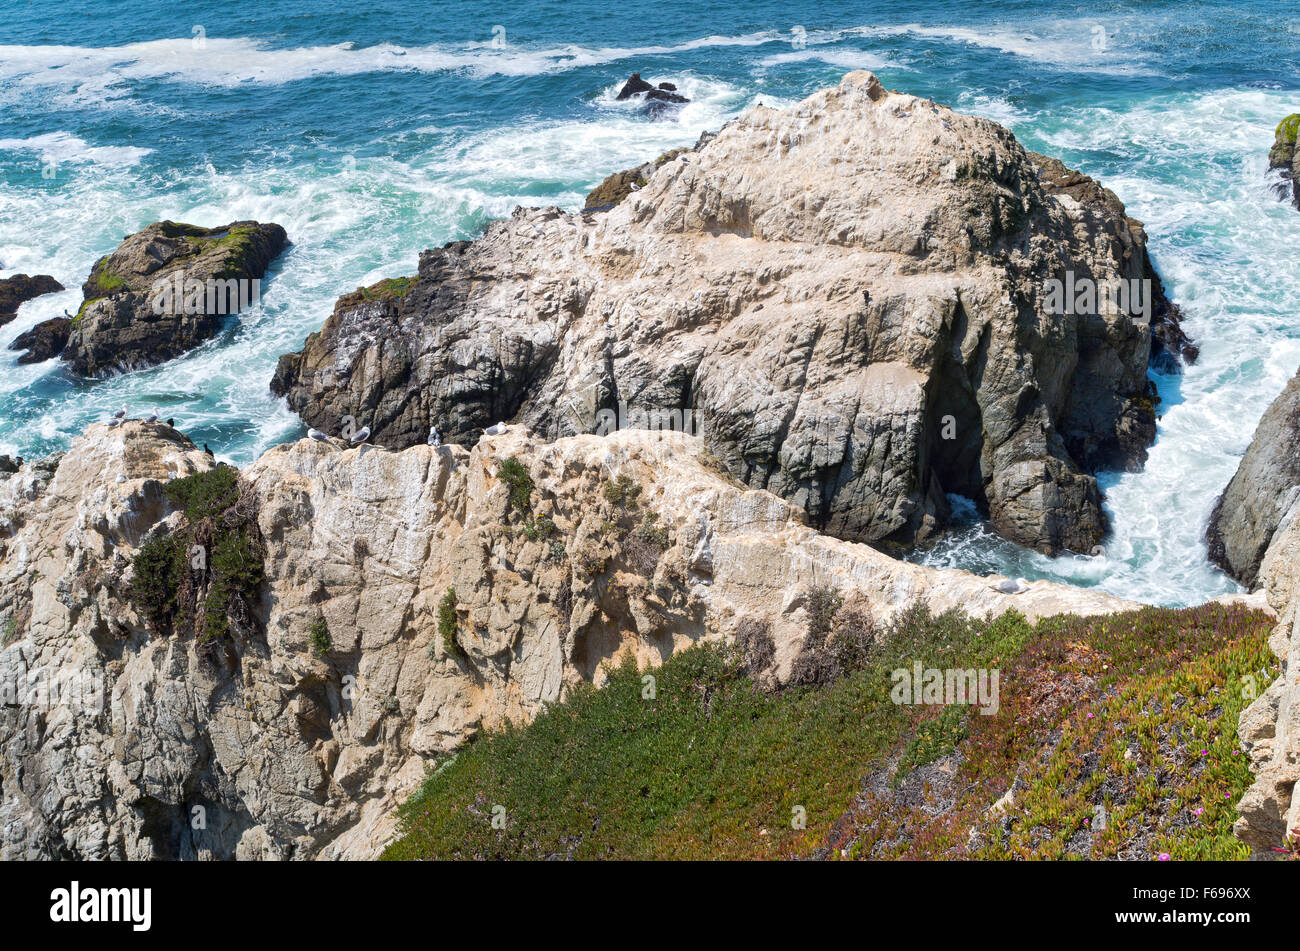 bodega head cliffs and rock outcropping along pacific coast of california Stock Photo